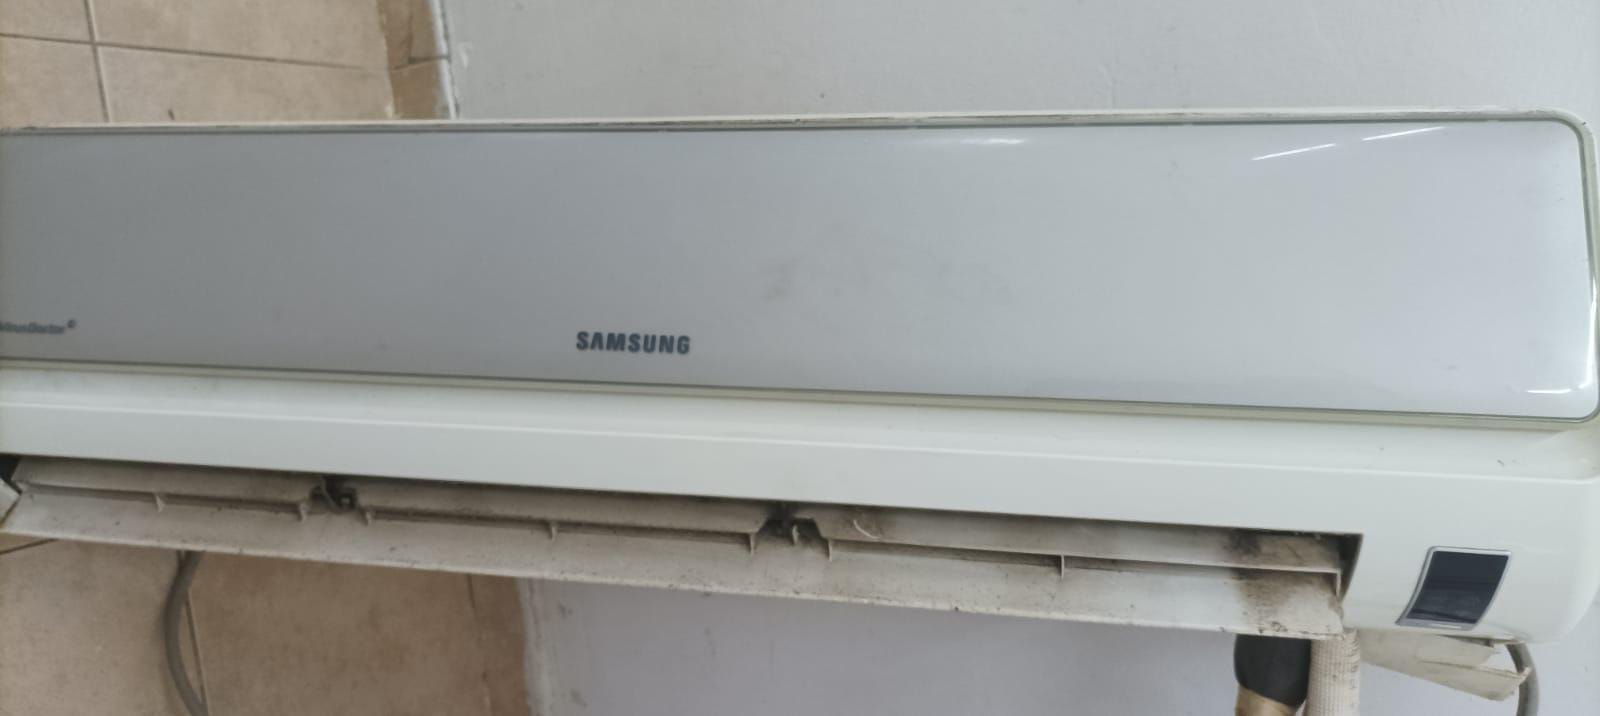 Samsung Split AC (24000 Btu) for Urgent Sale